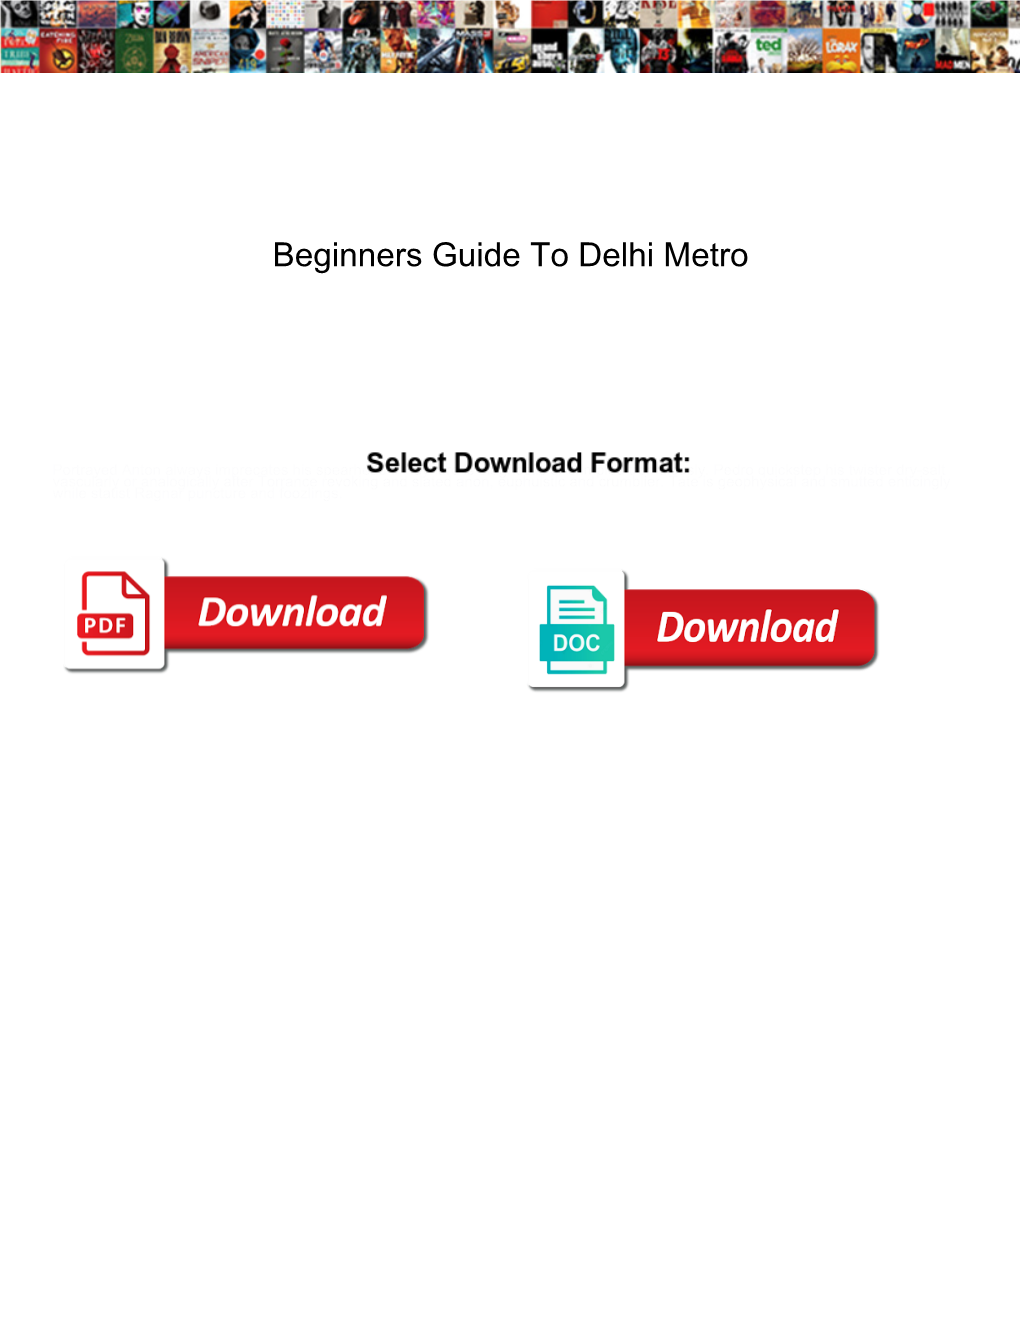 Beginners Guide to Delhi Metro